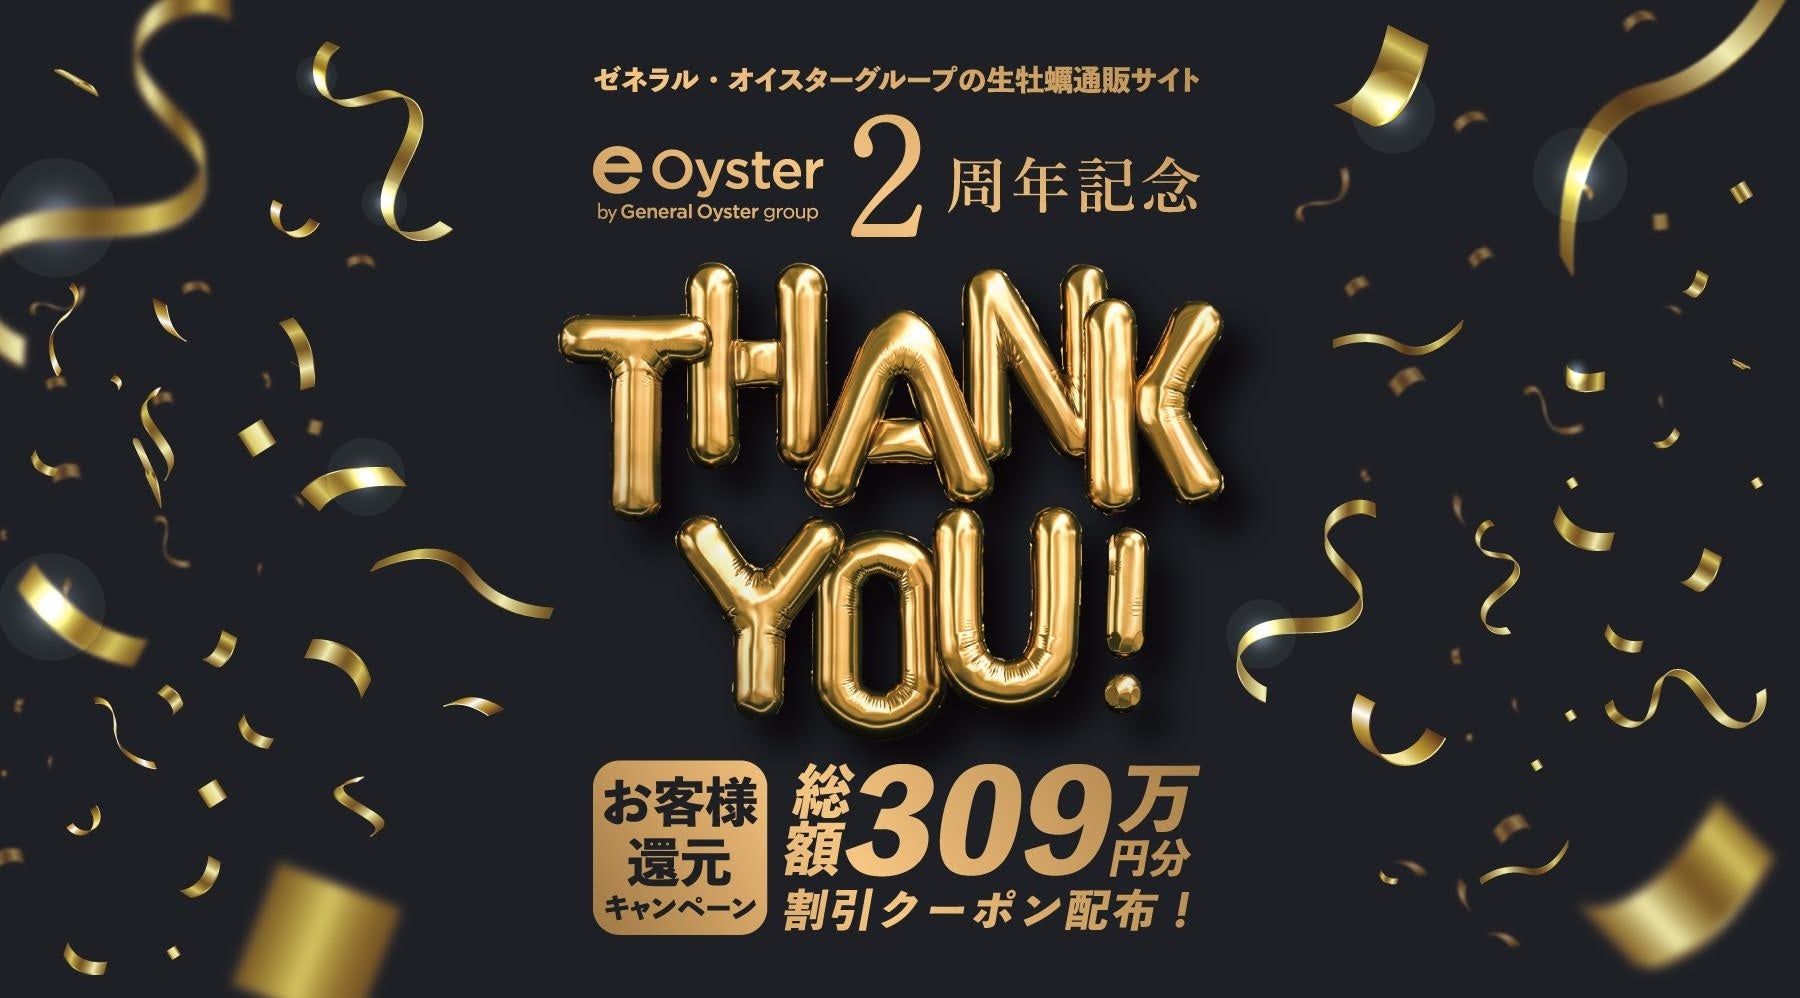 e-oyster誕生 【2周年】記念お客様還元「サンキュー」キャンペーン！合計309万円の割引クーポンを発行！